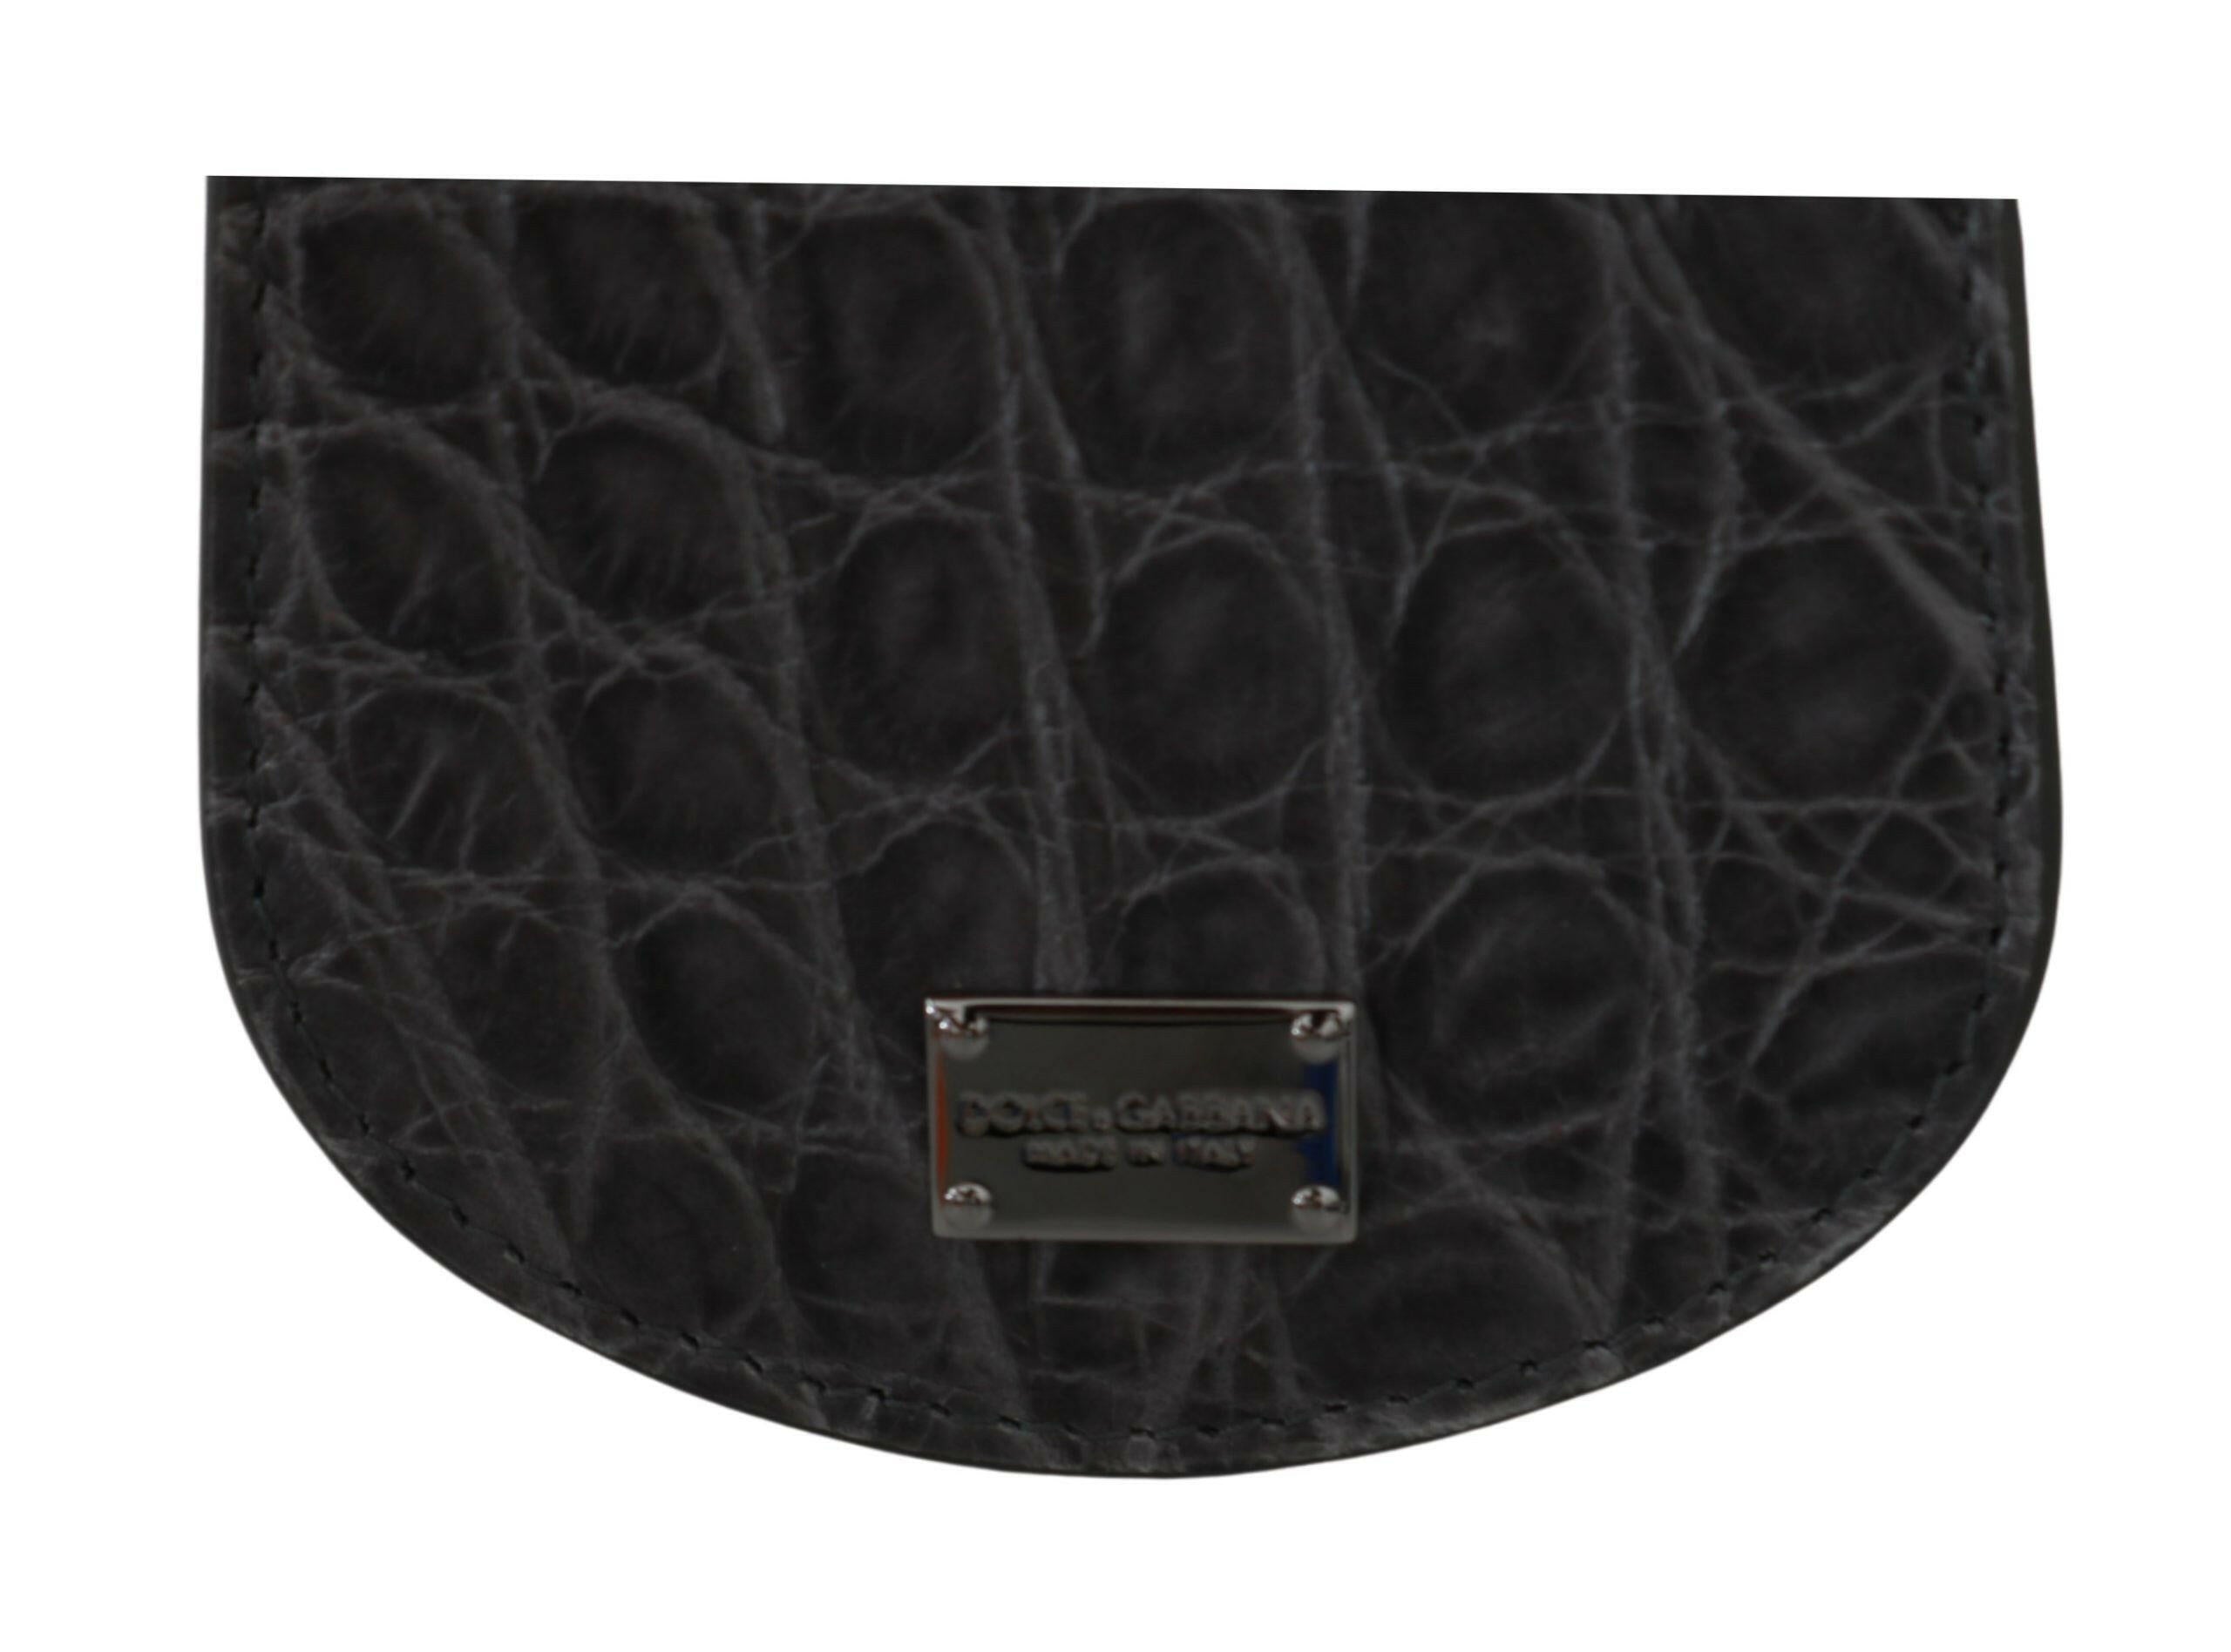 Dolce & Gabbana Gray Exotic Skin Condom Case Holder Pocket Wallet - GENUINE AUTHENTIC BRAND LLC  